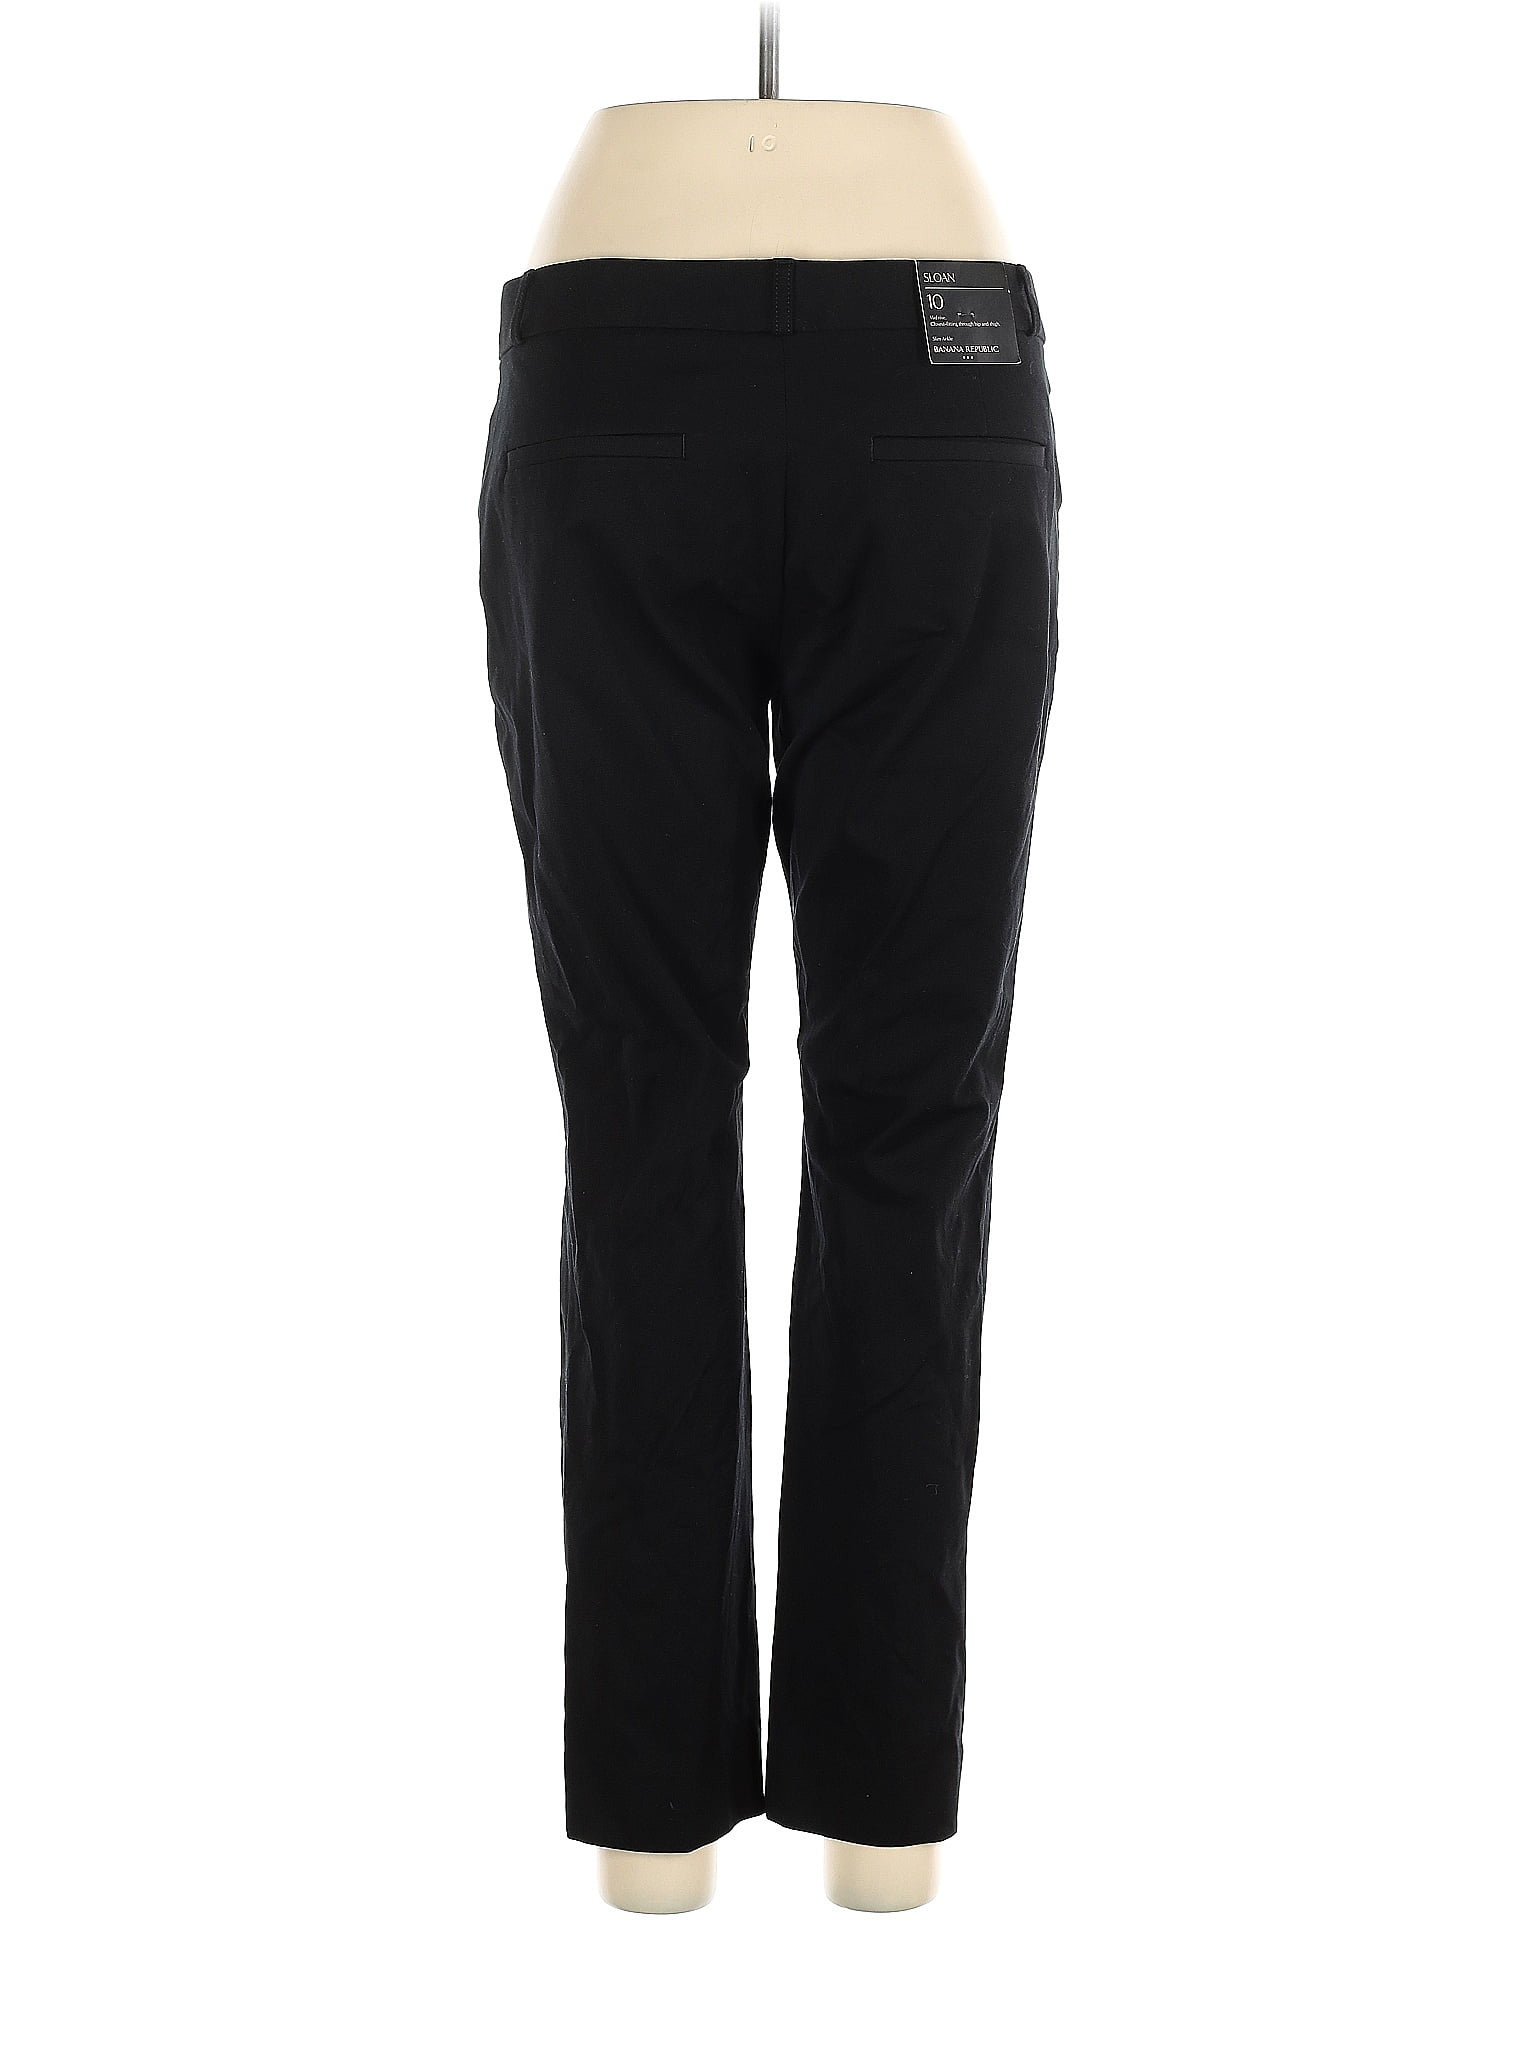 Banana Republic Factory Store Polka Dots Black Dress Pants Size 10 - 72%  off